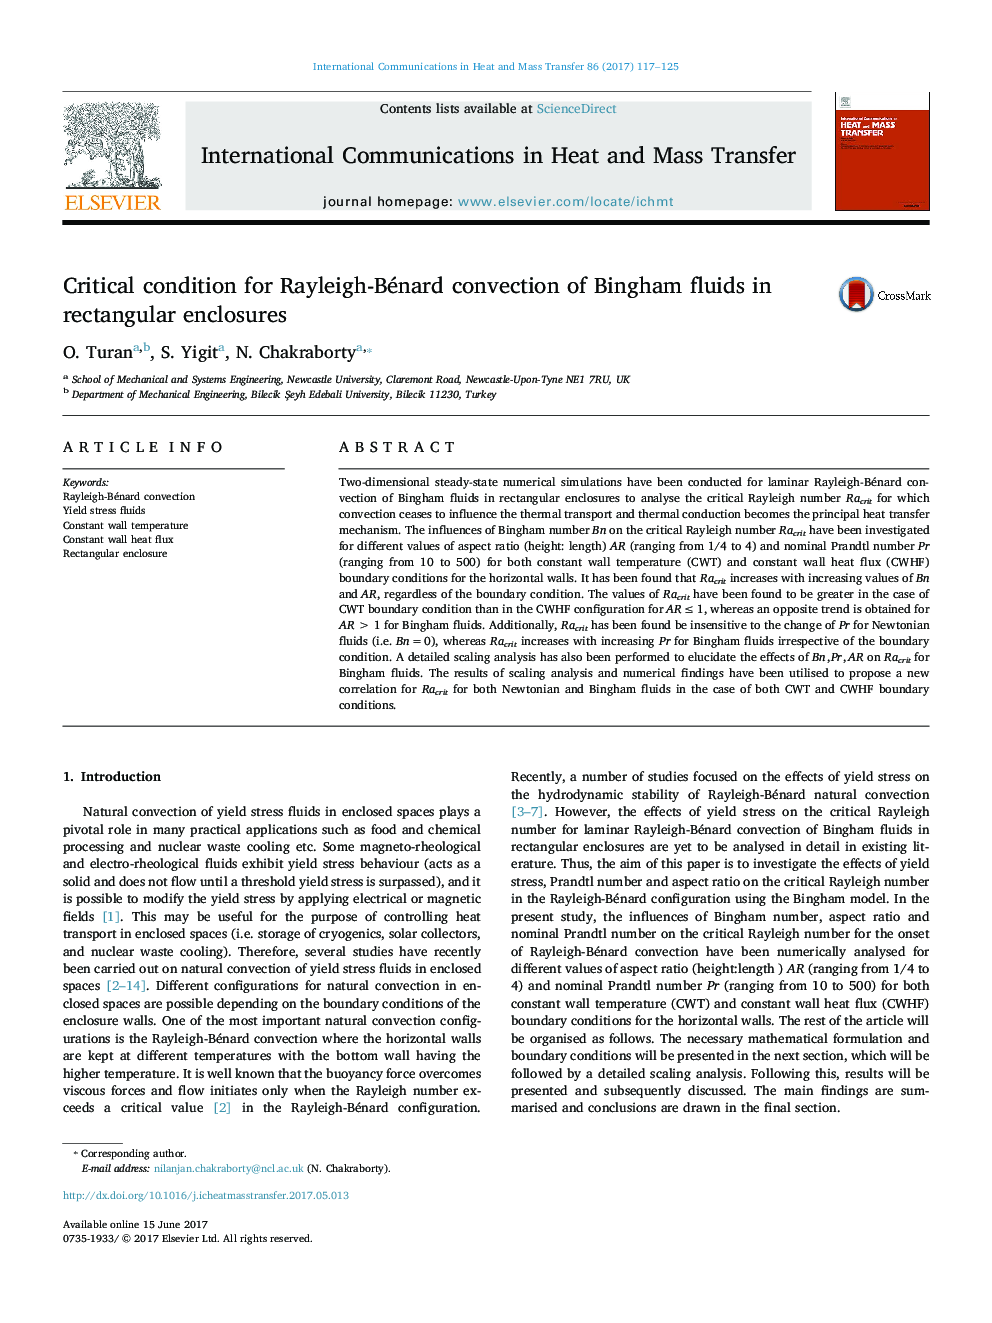 Critical condition for Rayleigh-Bénard convection of Bingham fluids in rectangular enclosures